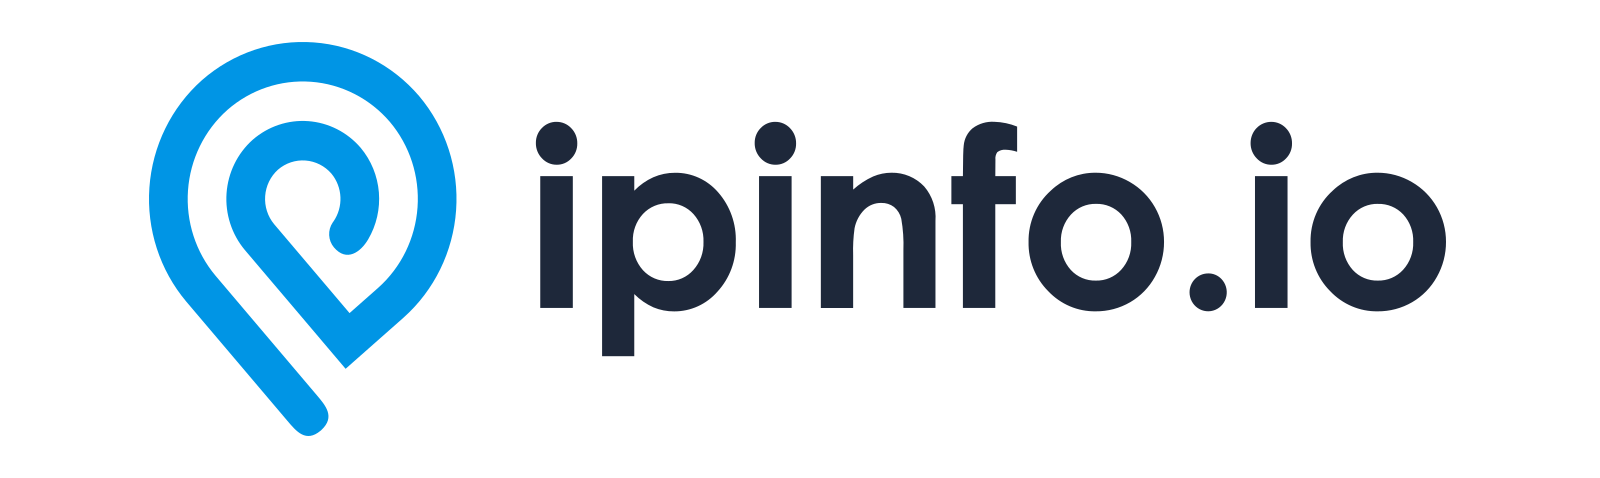 IPinfo